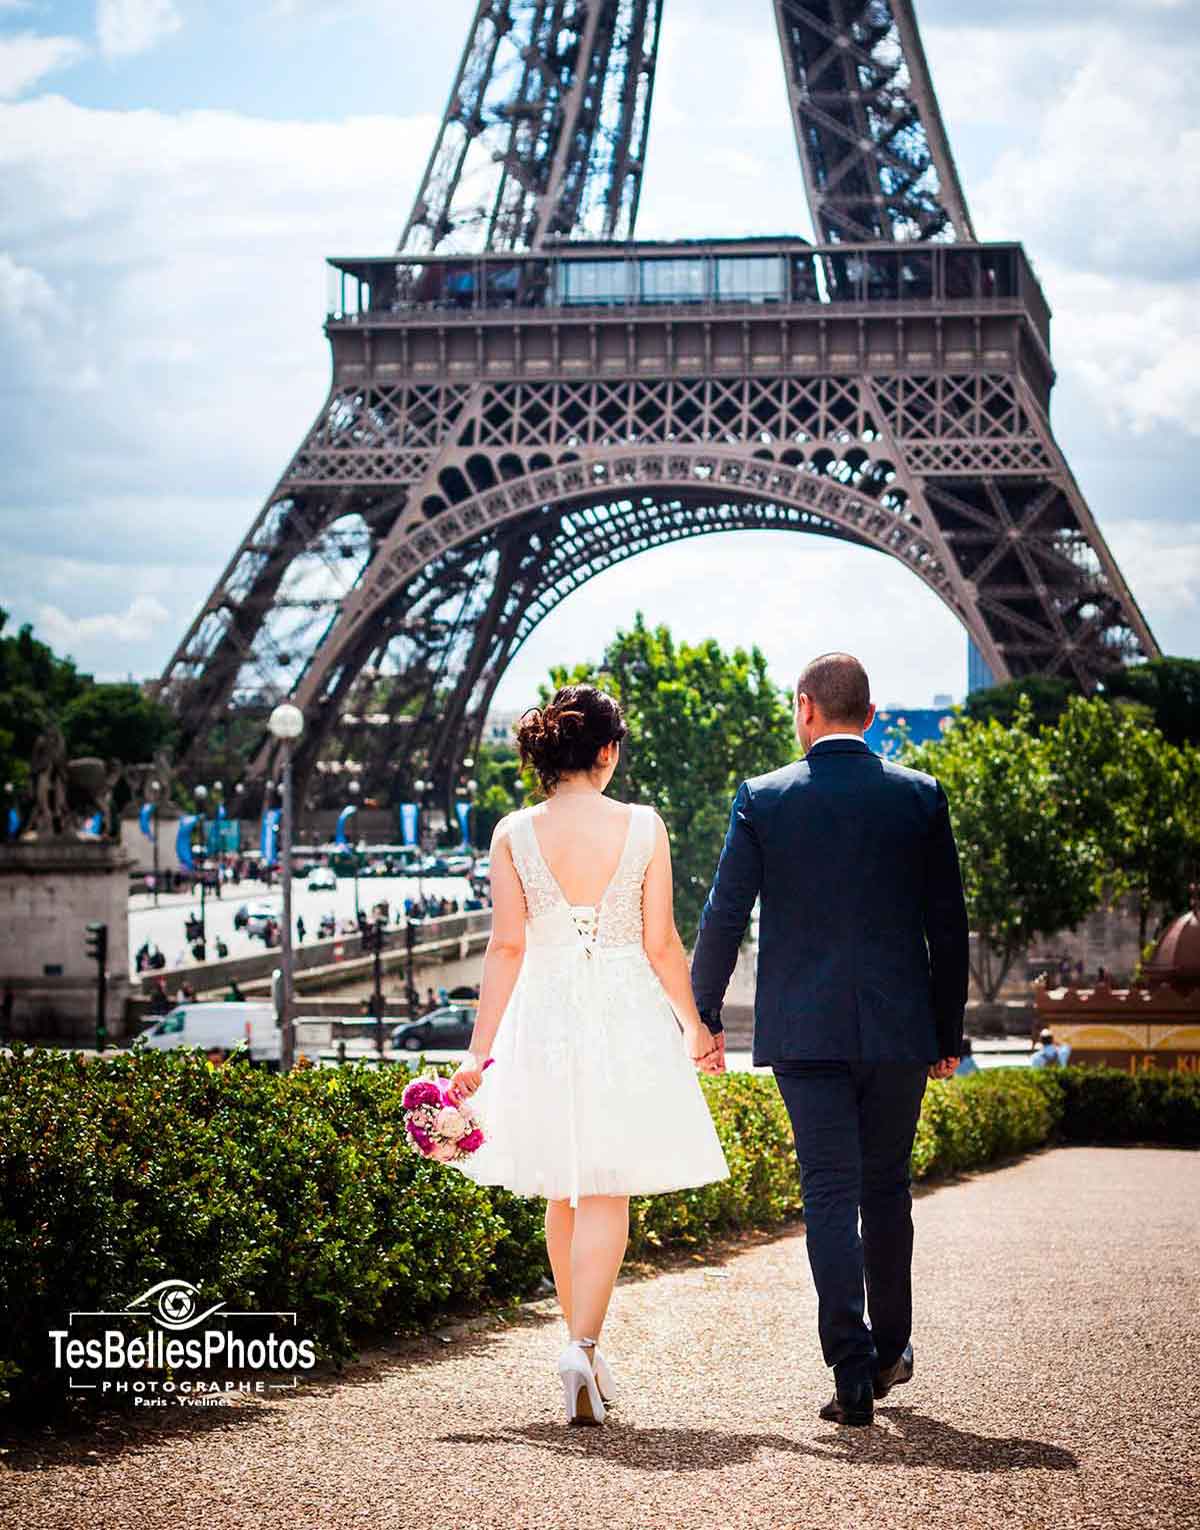 Photographe mariage Paris couple lifestyle, photo couple de mariage en lifestyle à Paris